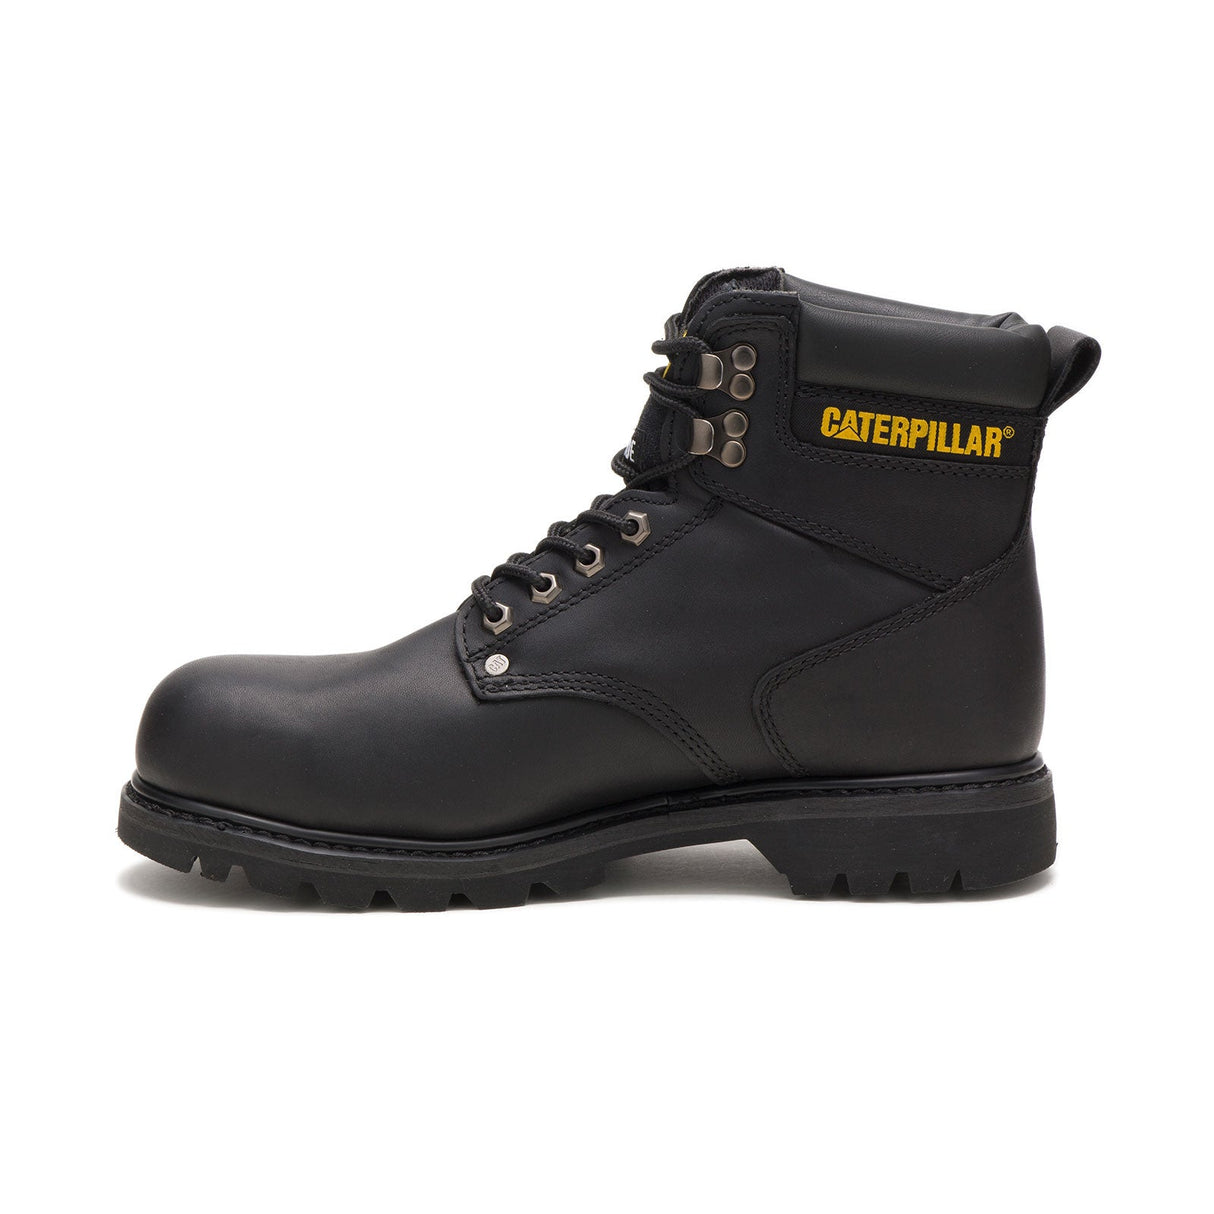 Caterpillar Second Shift Men's Steel-Toe Work Boots P89135-2